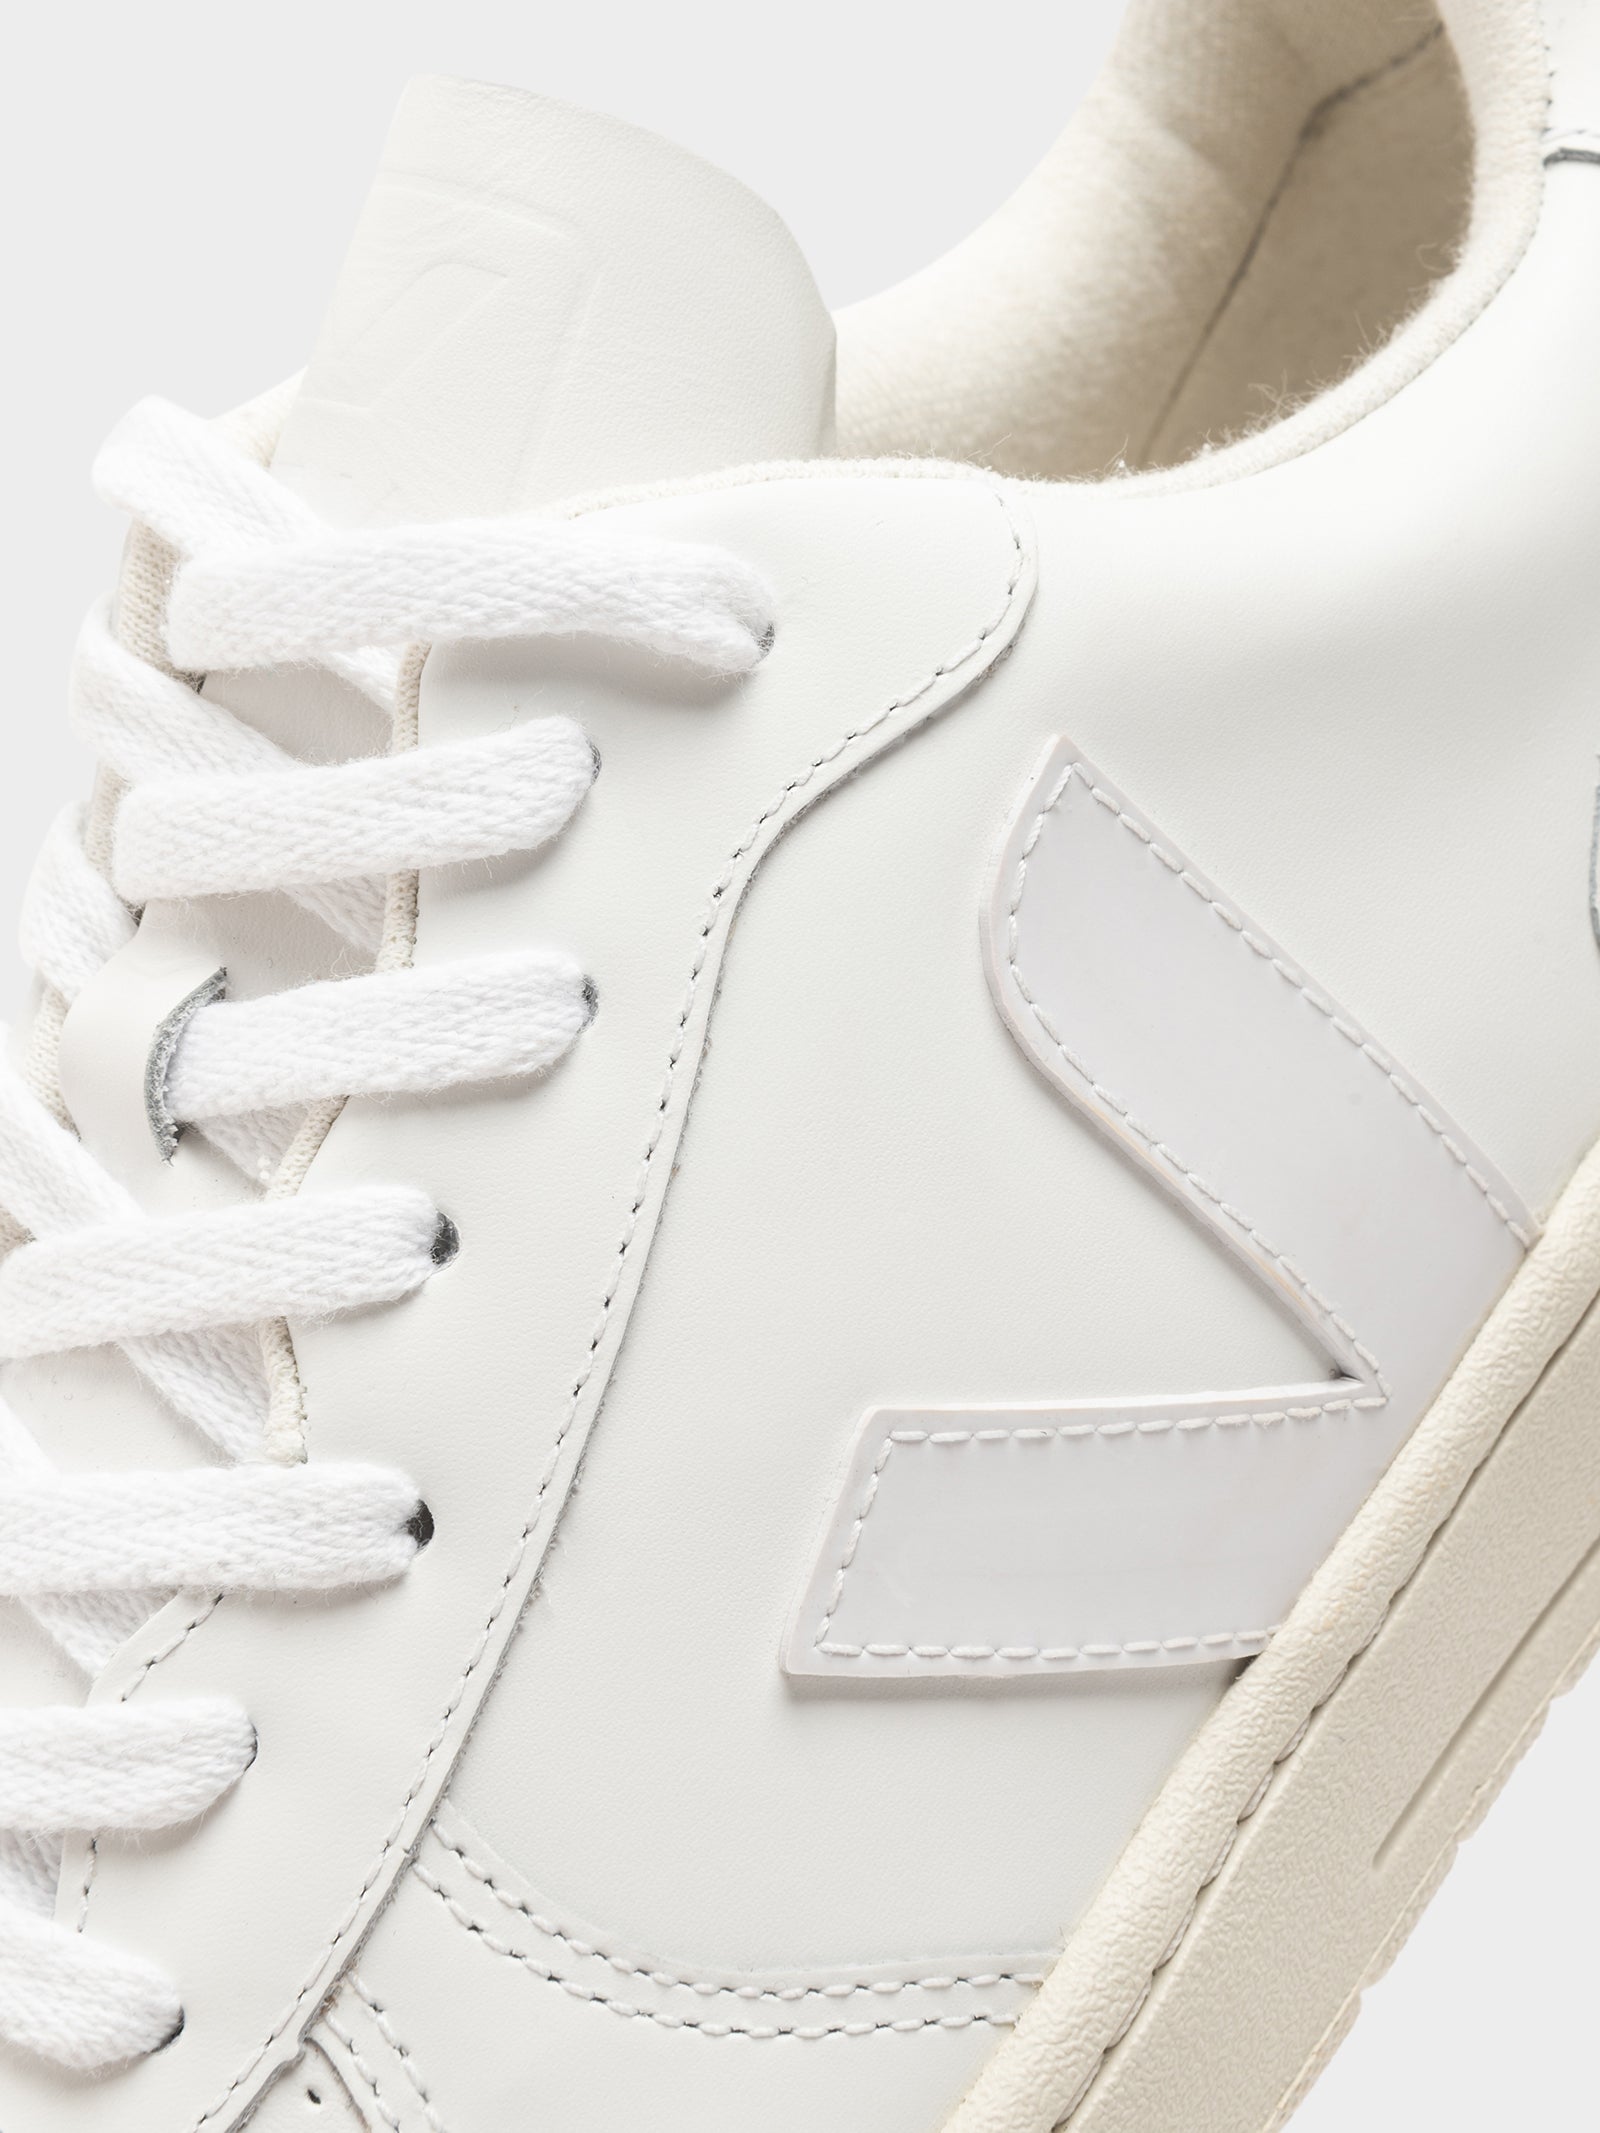 Unisex V-10 Leather Sneaker in Extra White